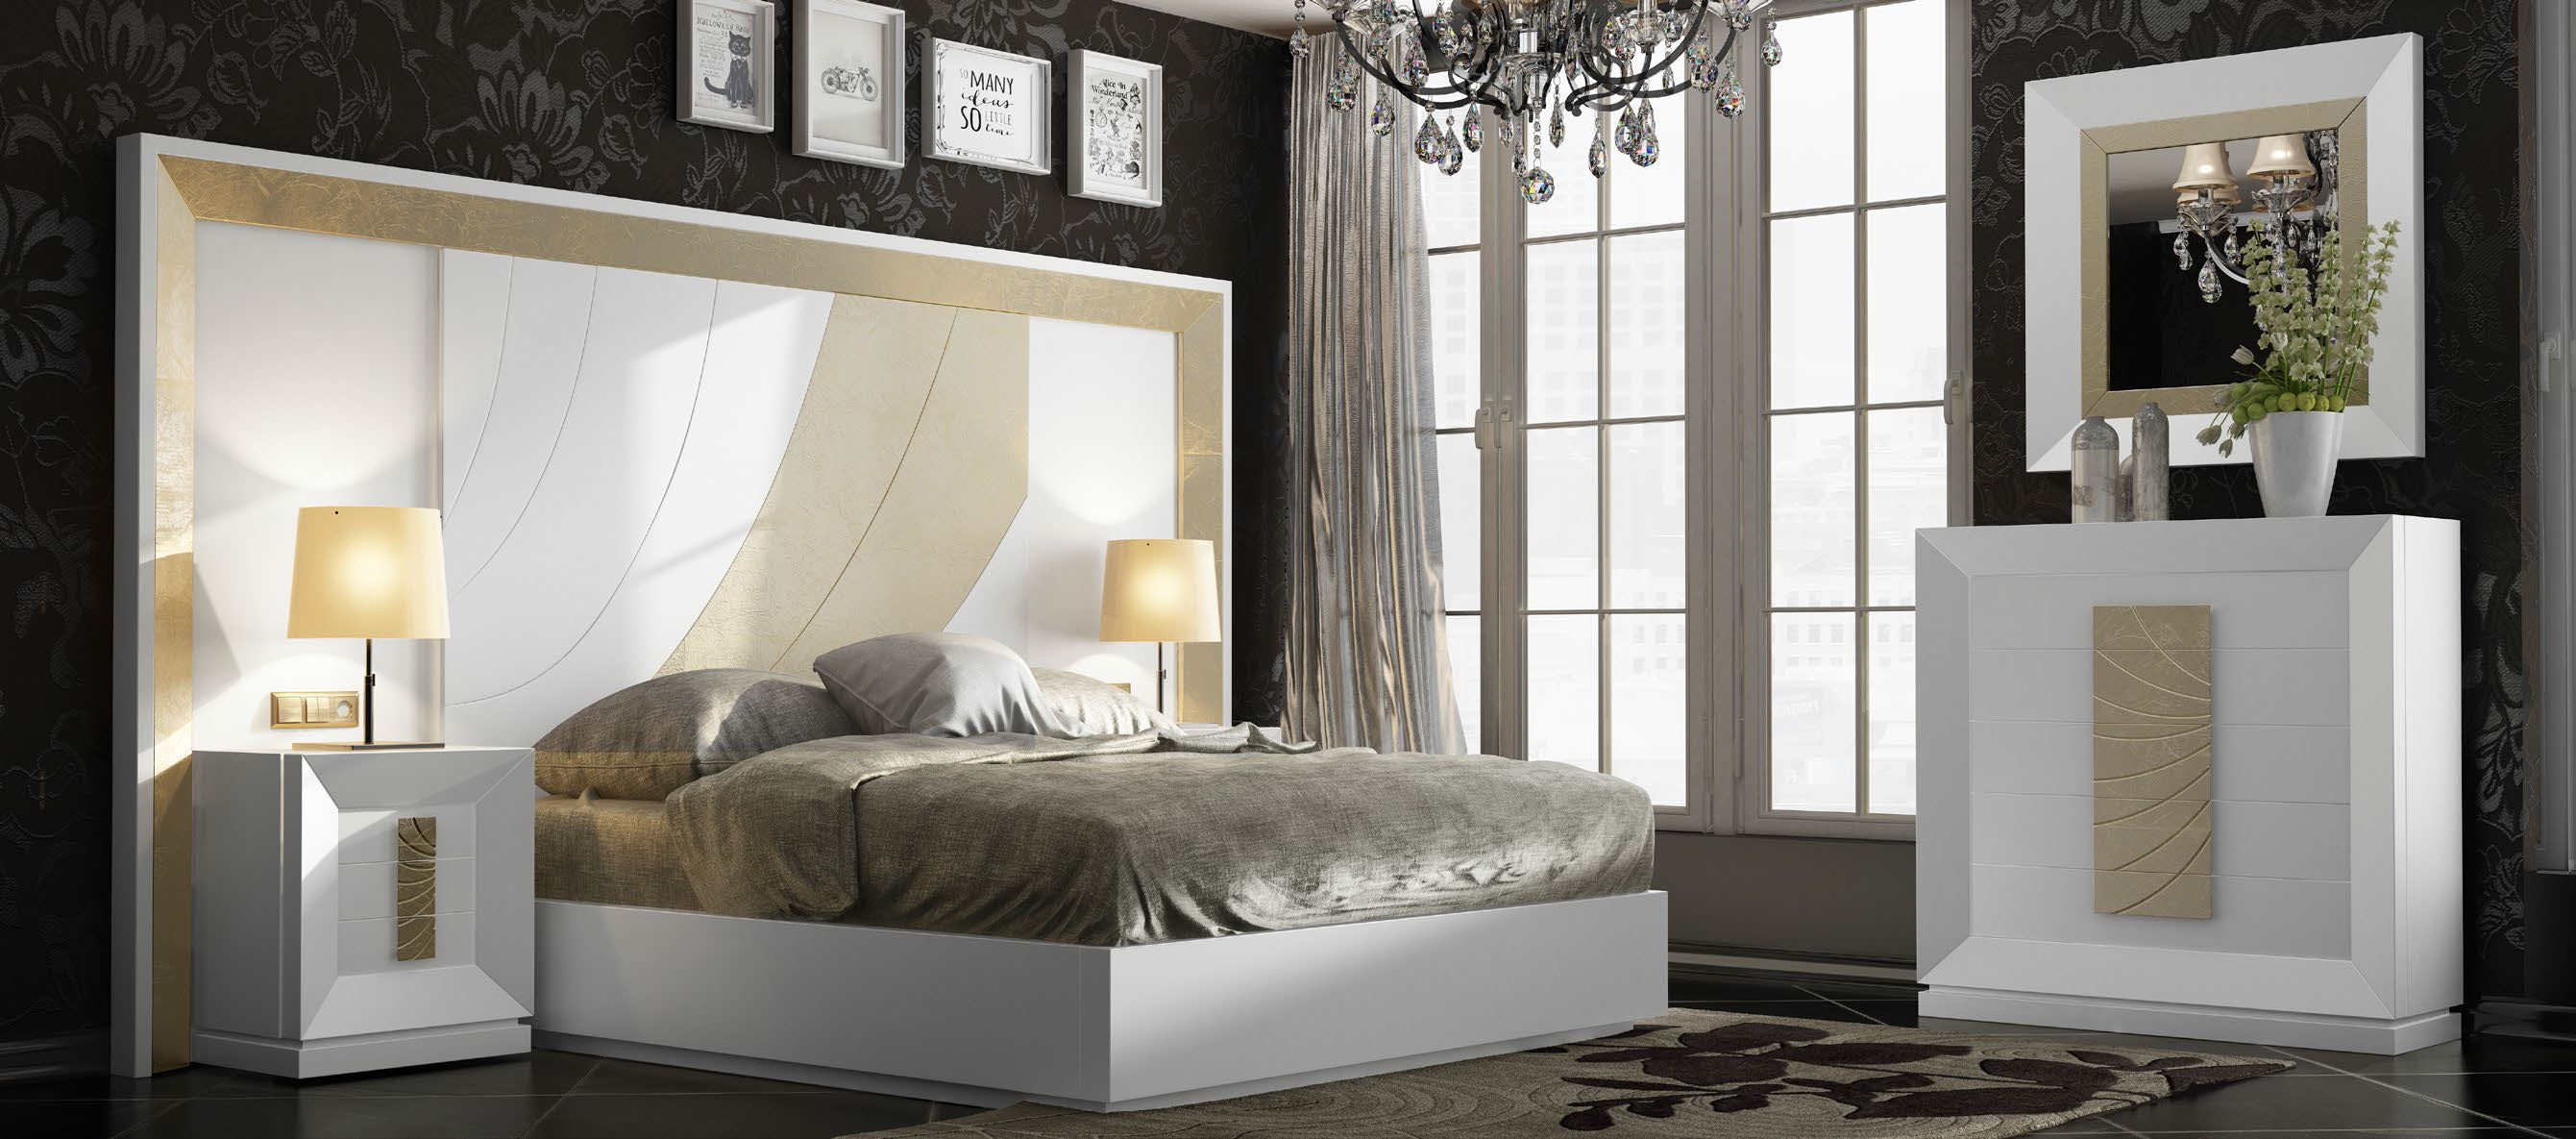 Brands Franco Furniture Bedrooms vol1, Spain DOR 130